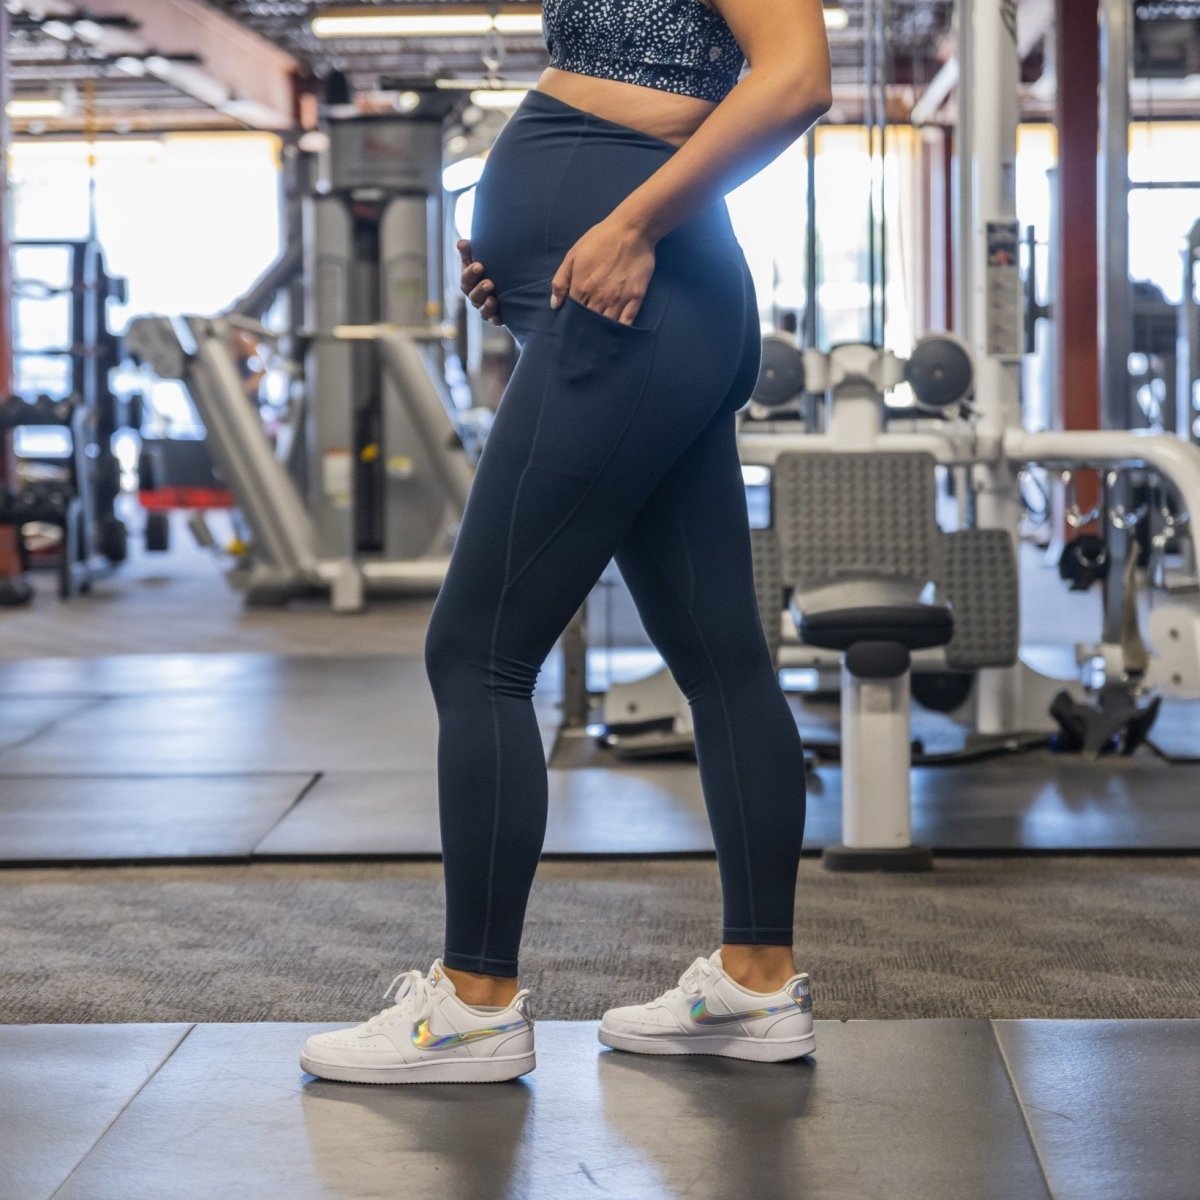 Senita Athletics - Finally! Maternity workout leggings with